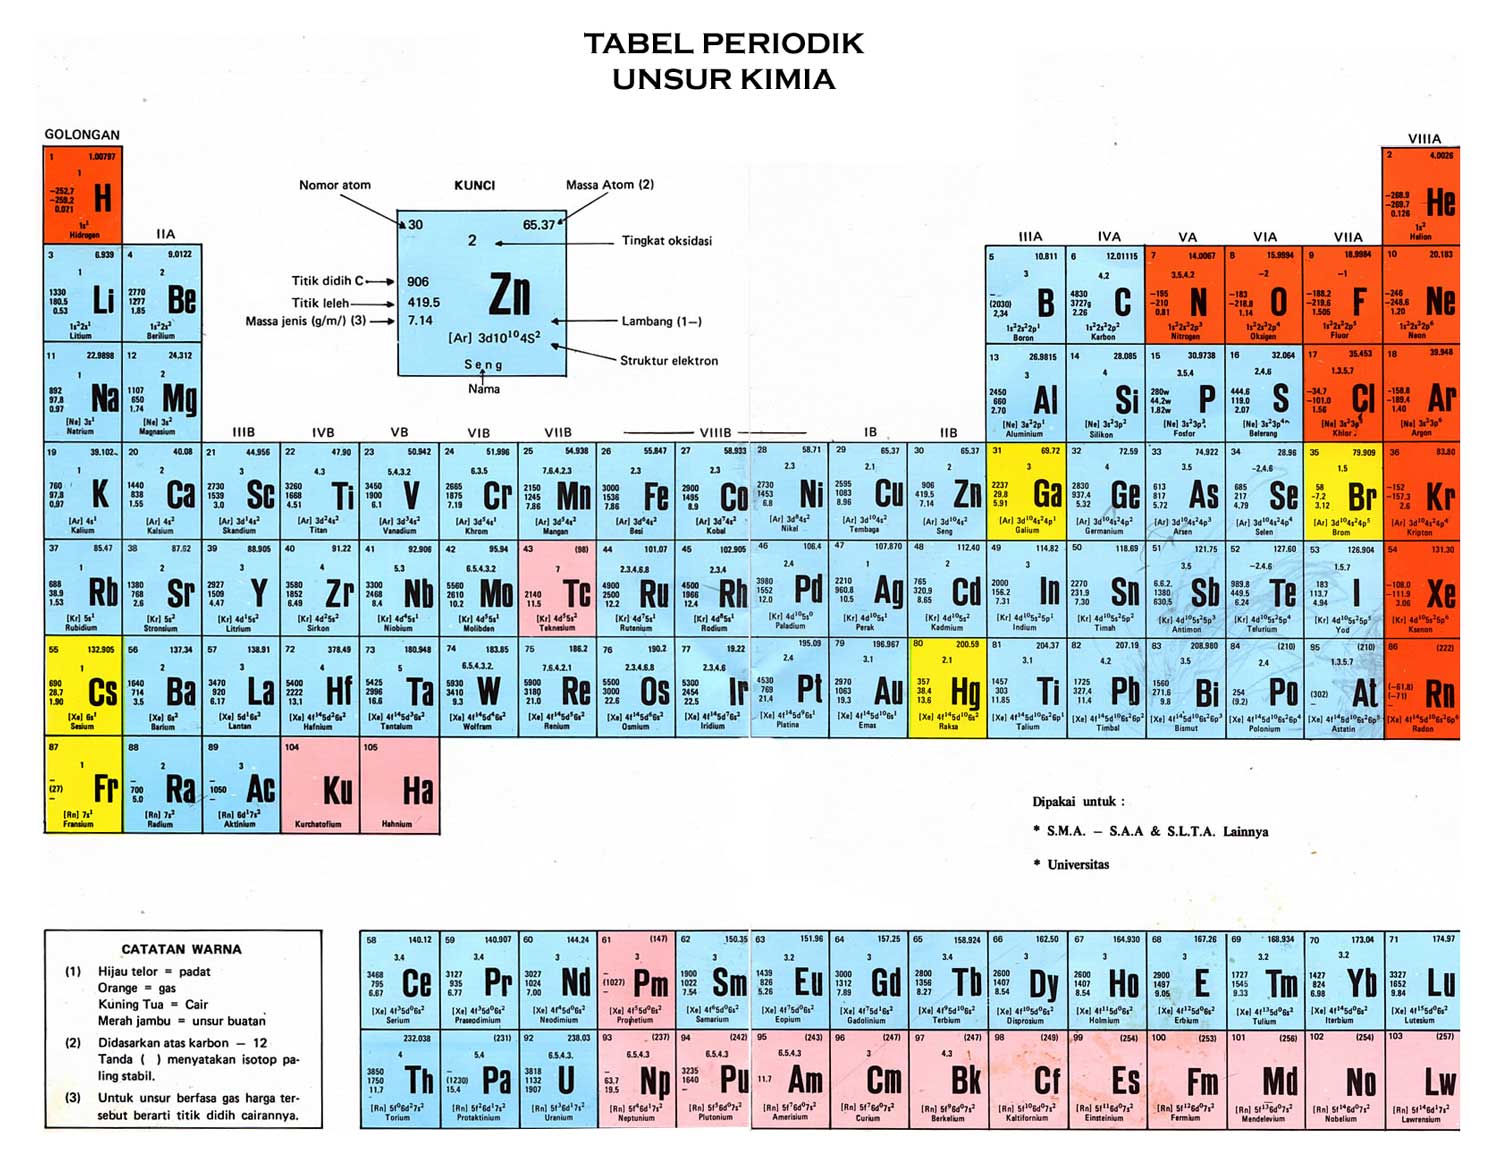 Tabel Periodik Unsur Kimia For Android Apk Download